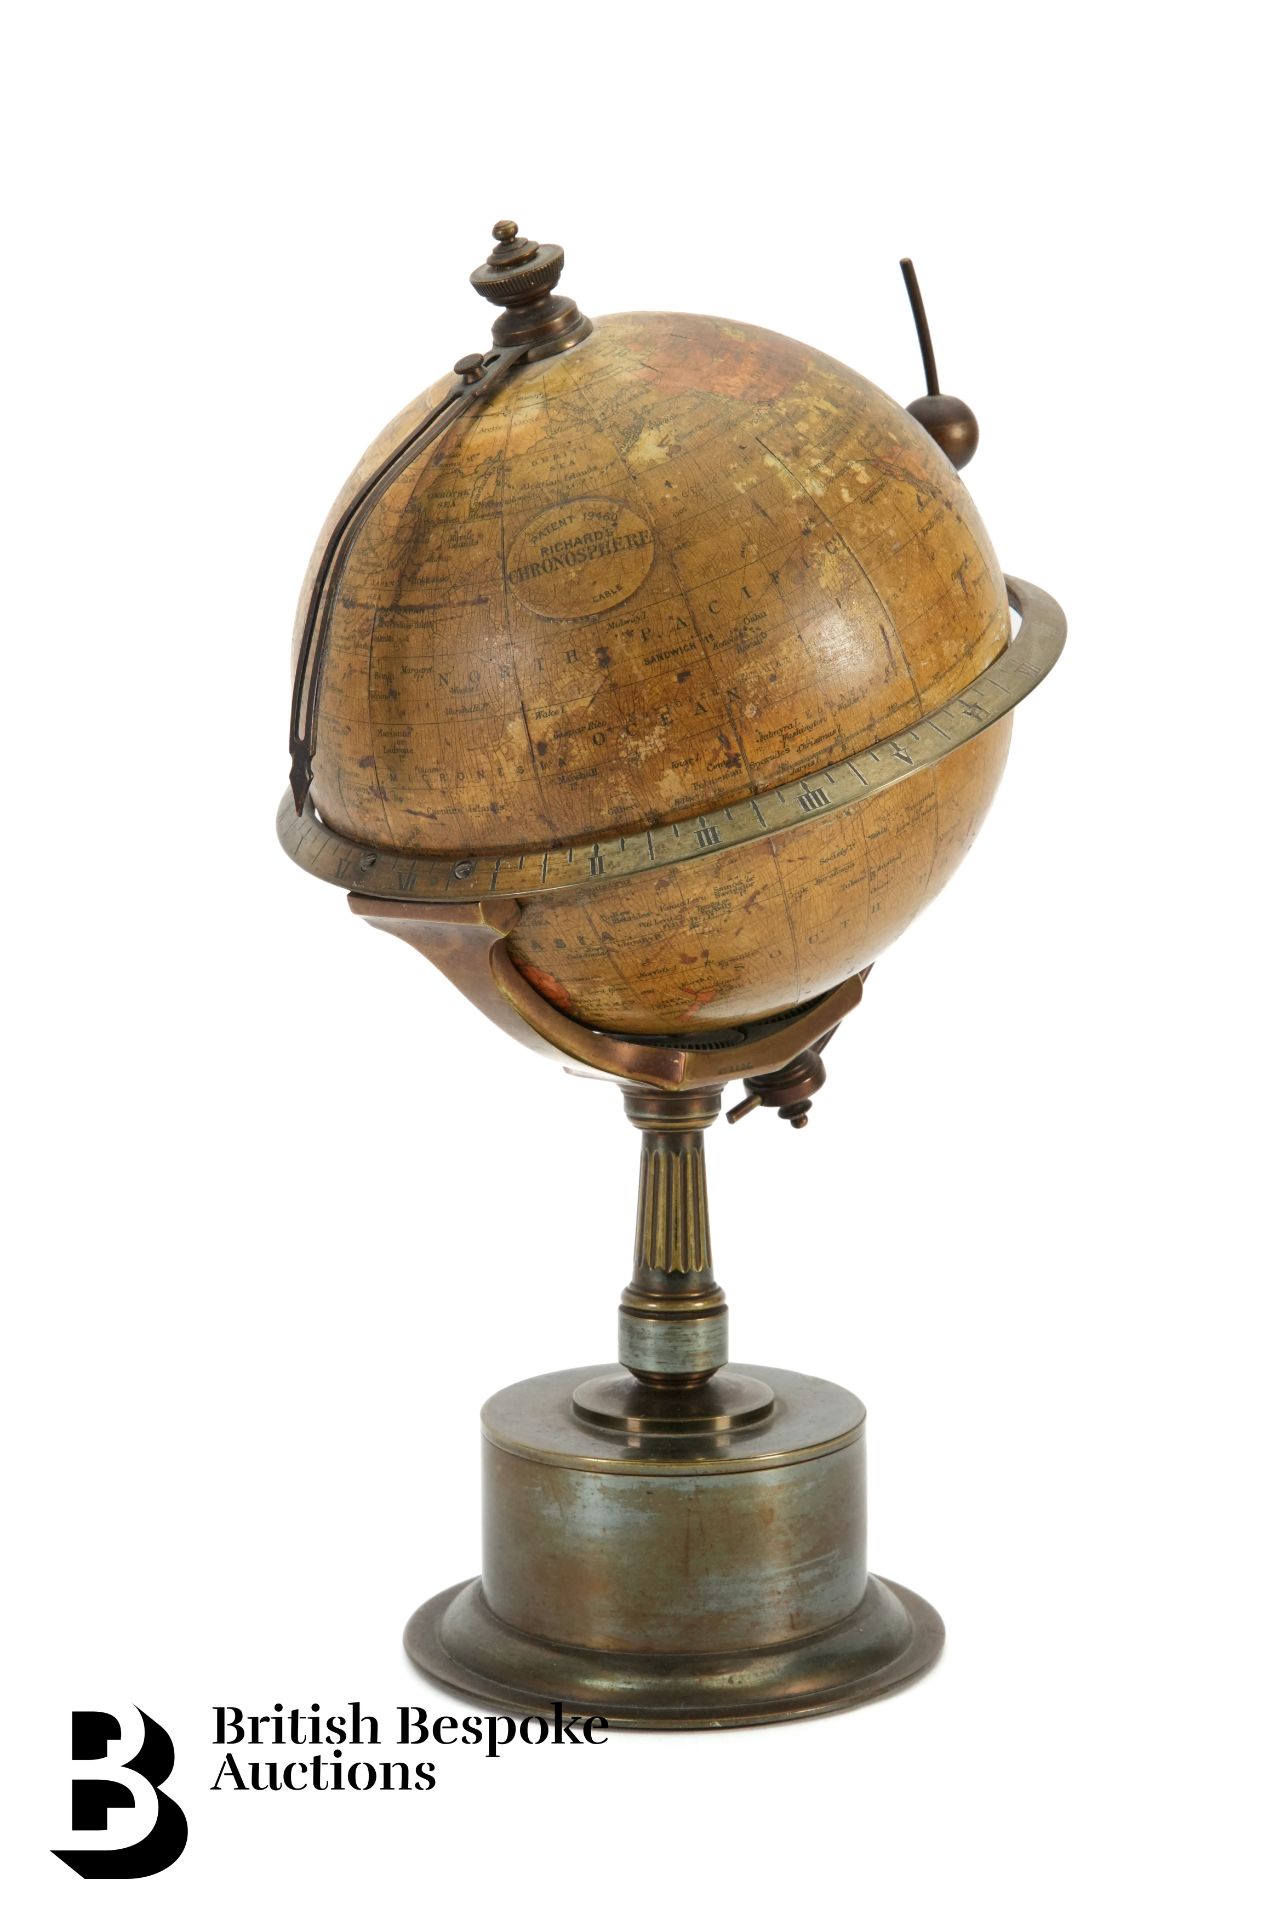 19th Century Richard's Chronosphere Globe - Image 2 of 6